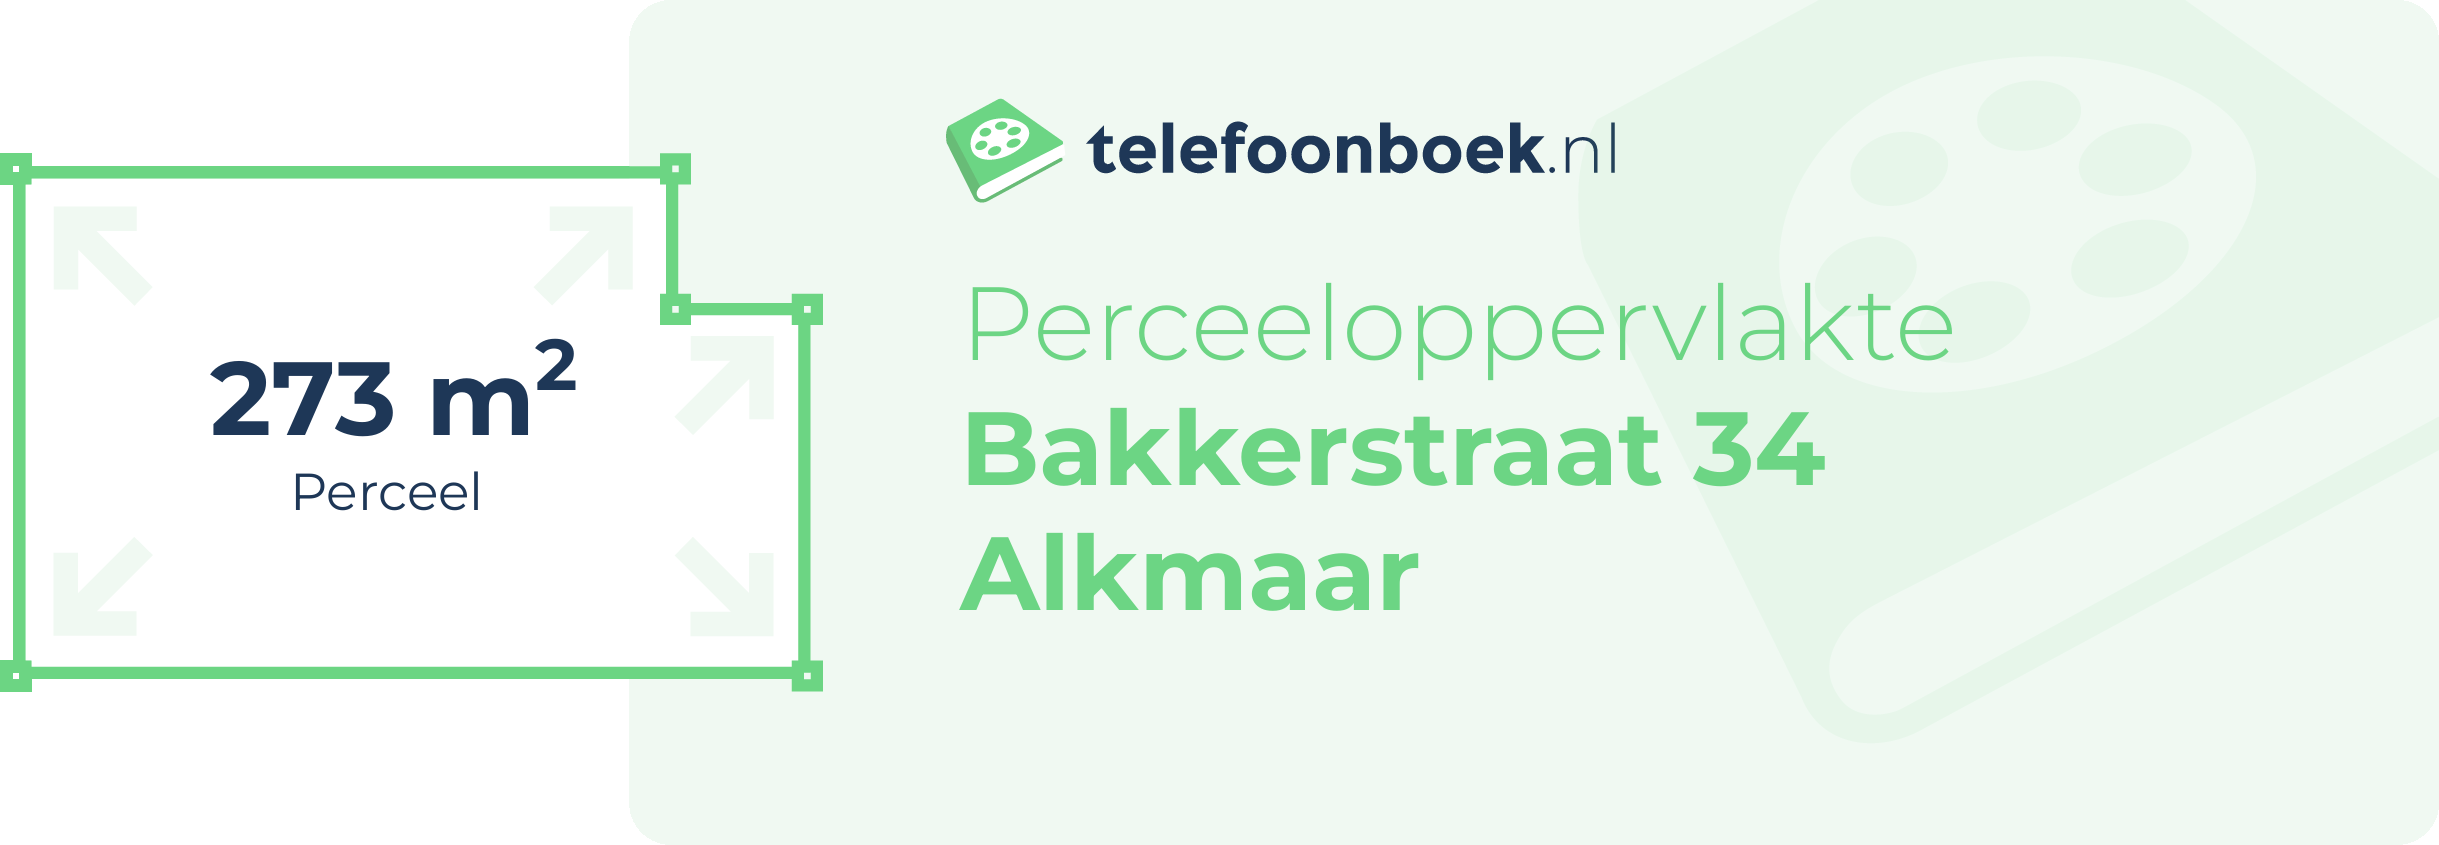 Perceeloppervlakte Bakkerstraat 34 Alkmaar